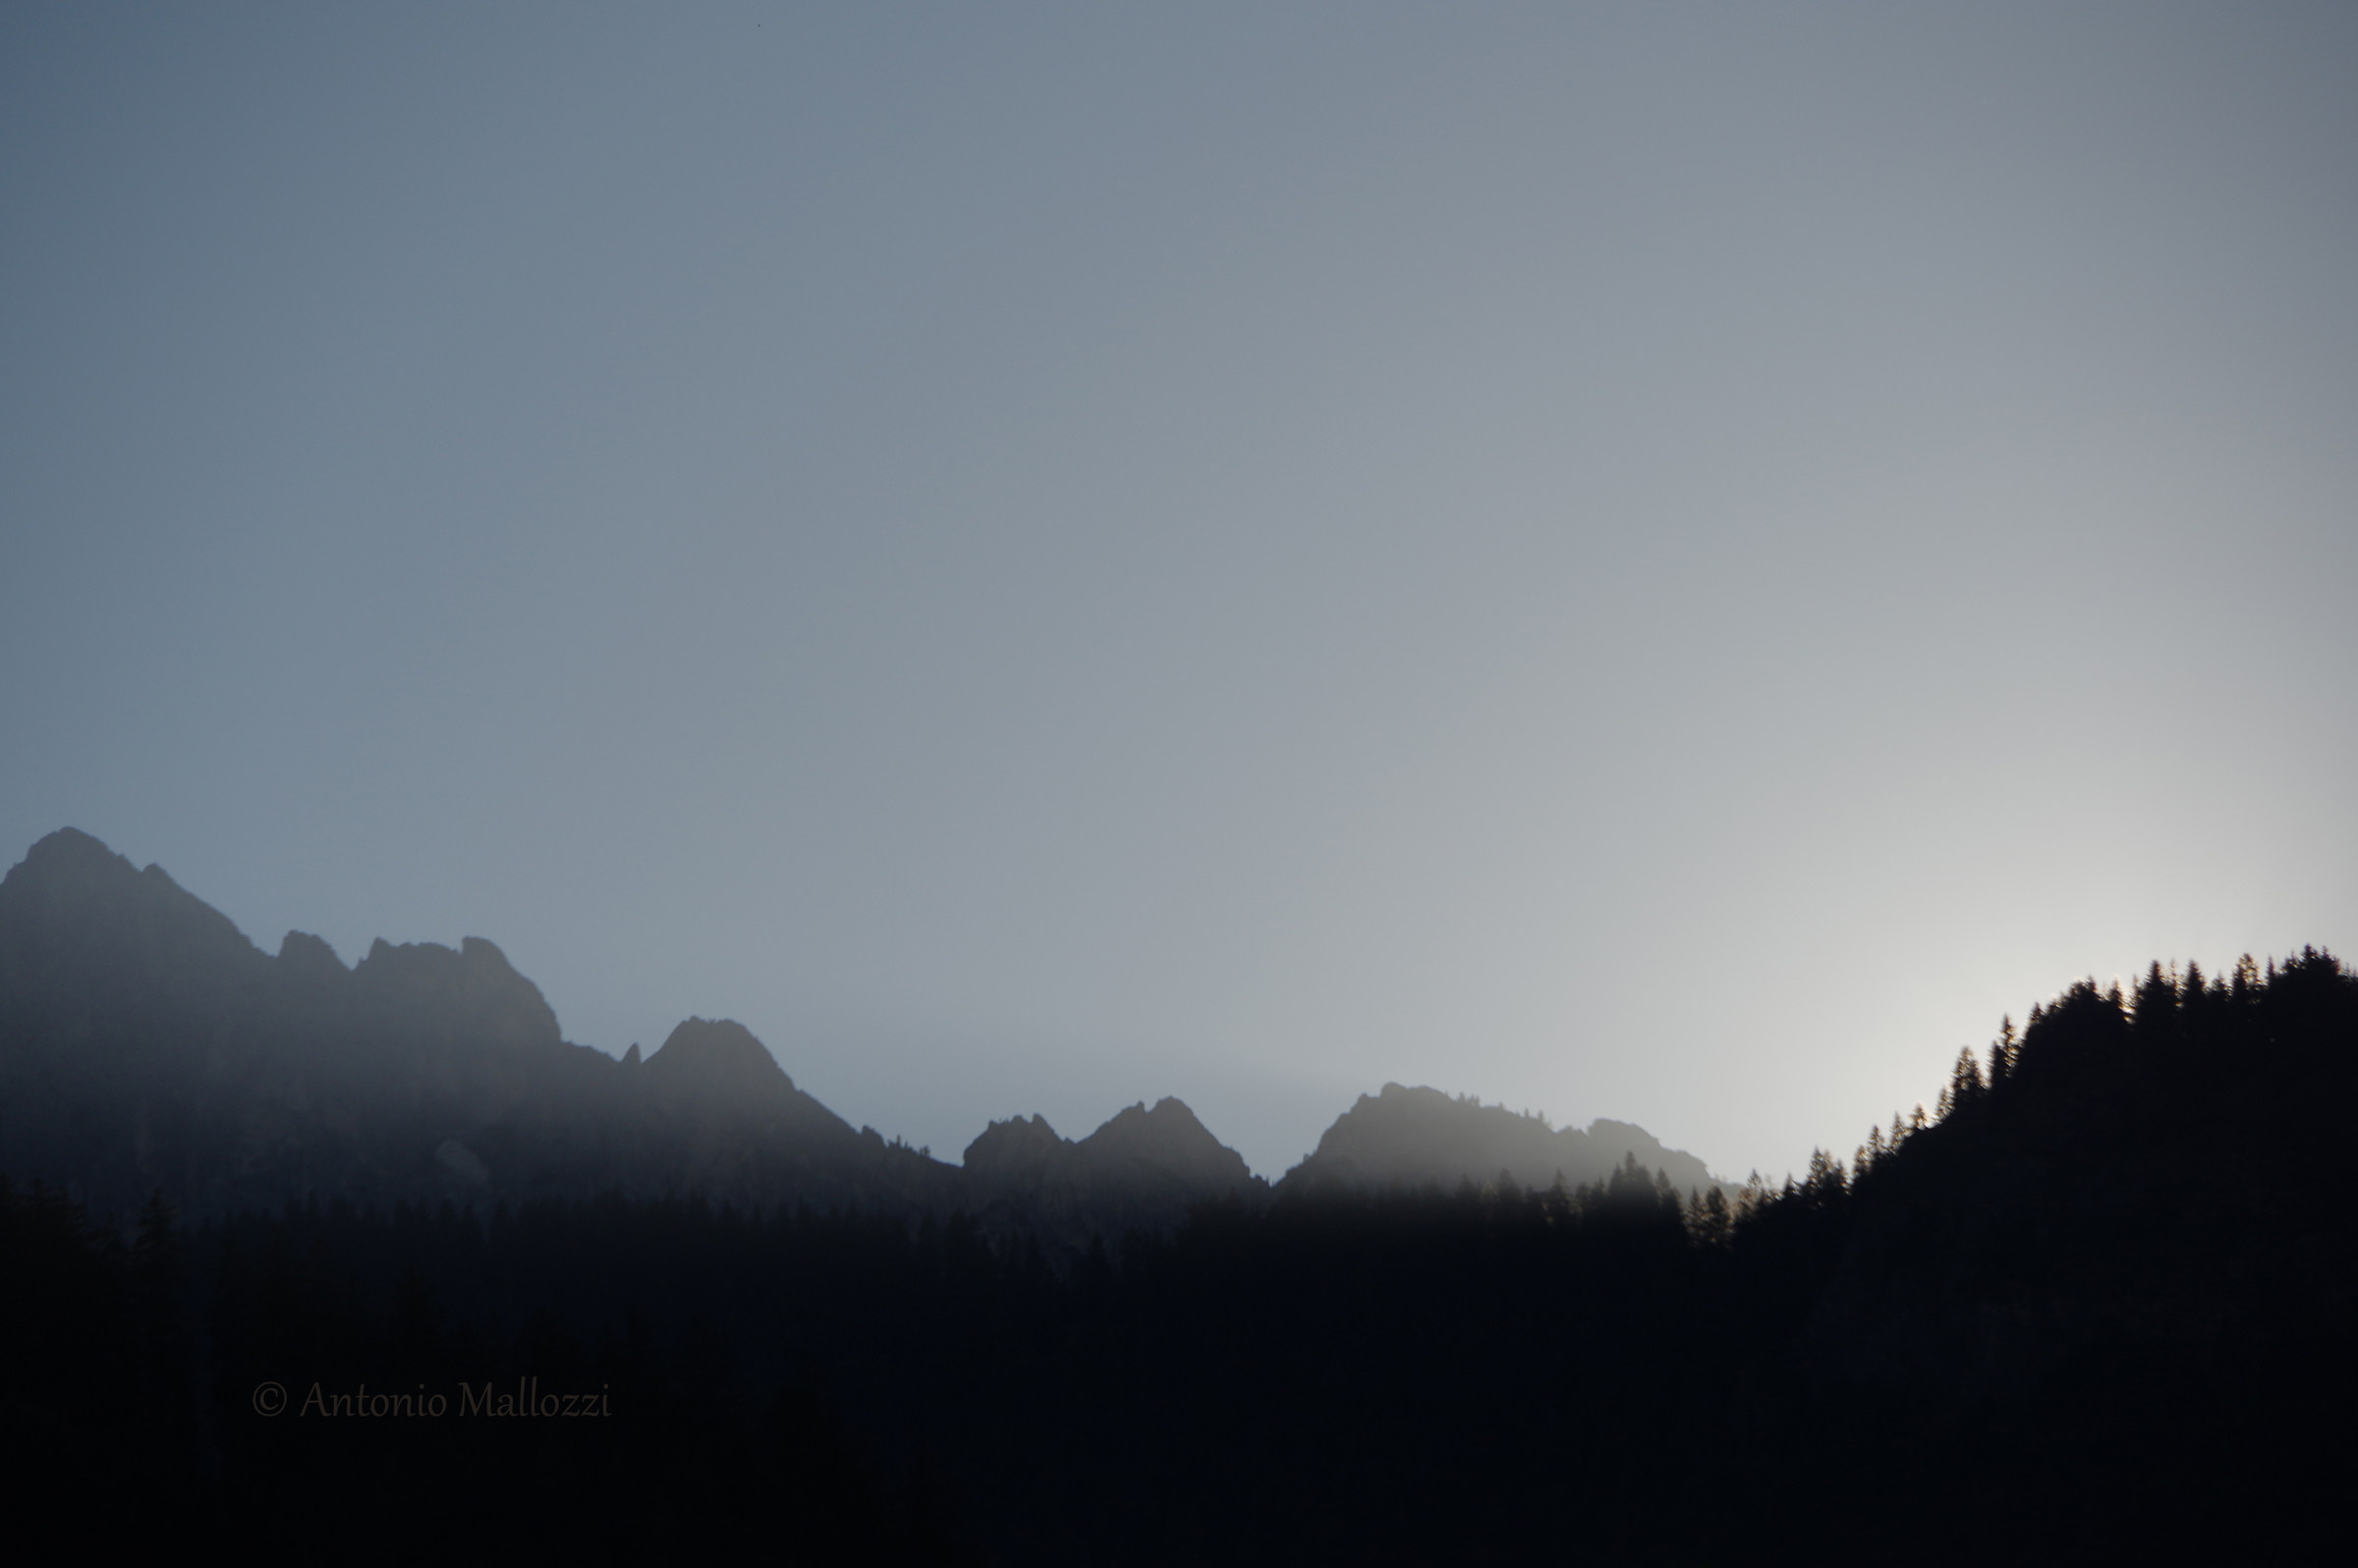 Dolomites in the day's last light...